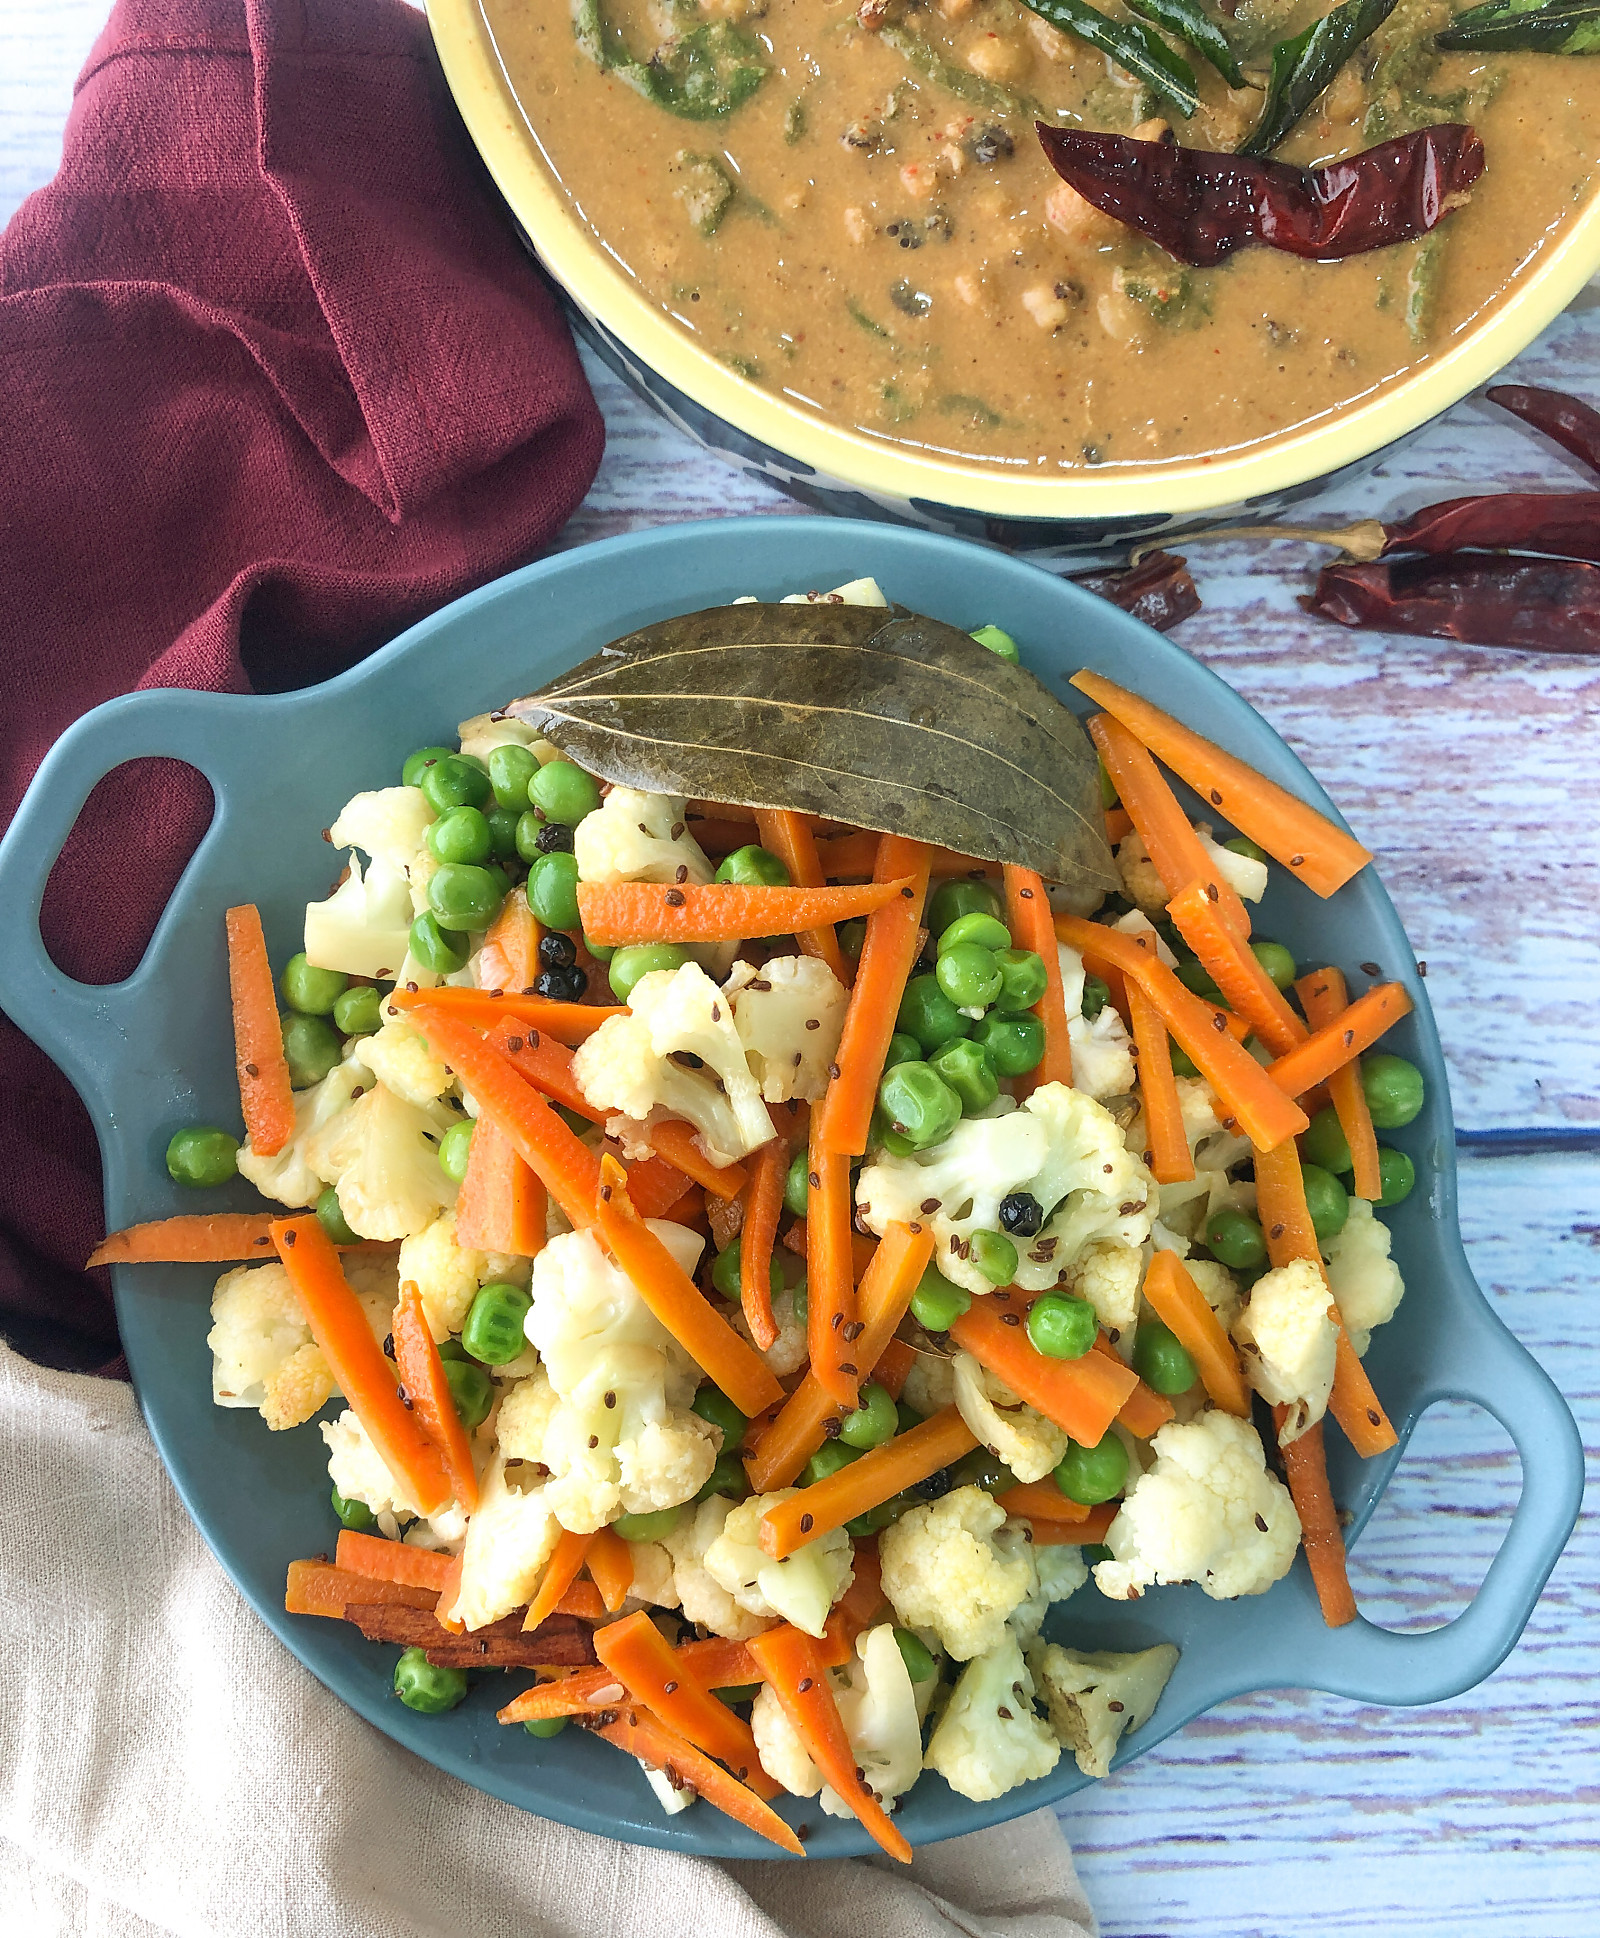 गाजर गोभी मटर सब्ज़ी रेसिपी - Carrot Cauliflower Peas Sabzi Recipe